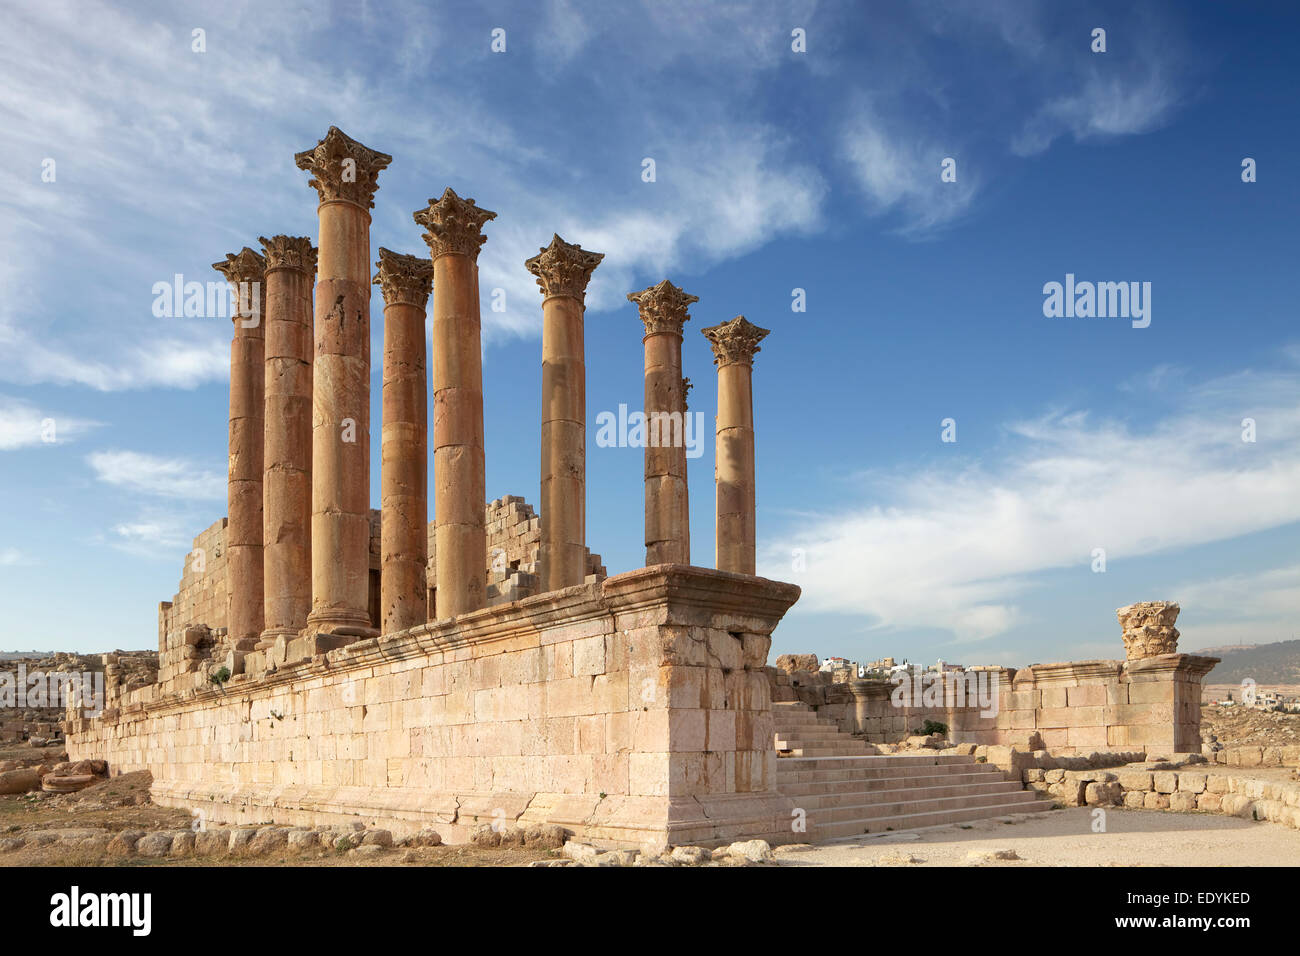 Columns, Artemis Temple, built in the 2nd century AD, ancient Roman city of Jerash, part of the Decapolis, Jerash Stock Photo